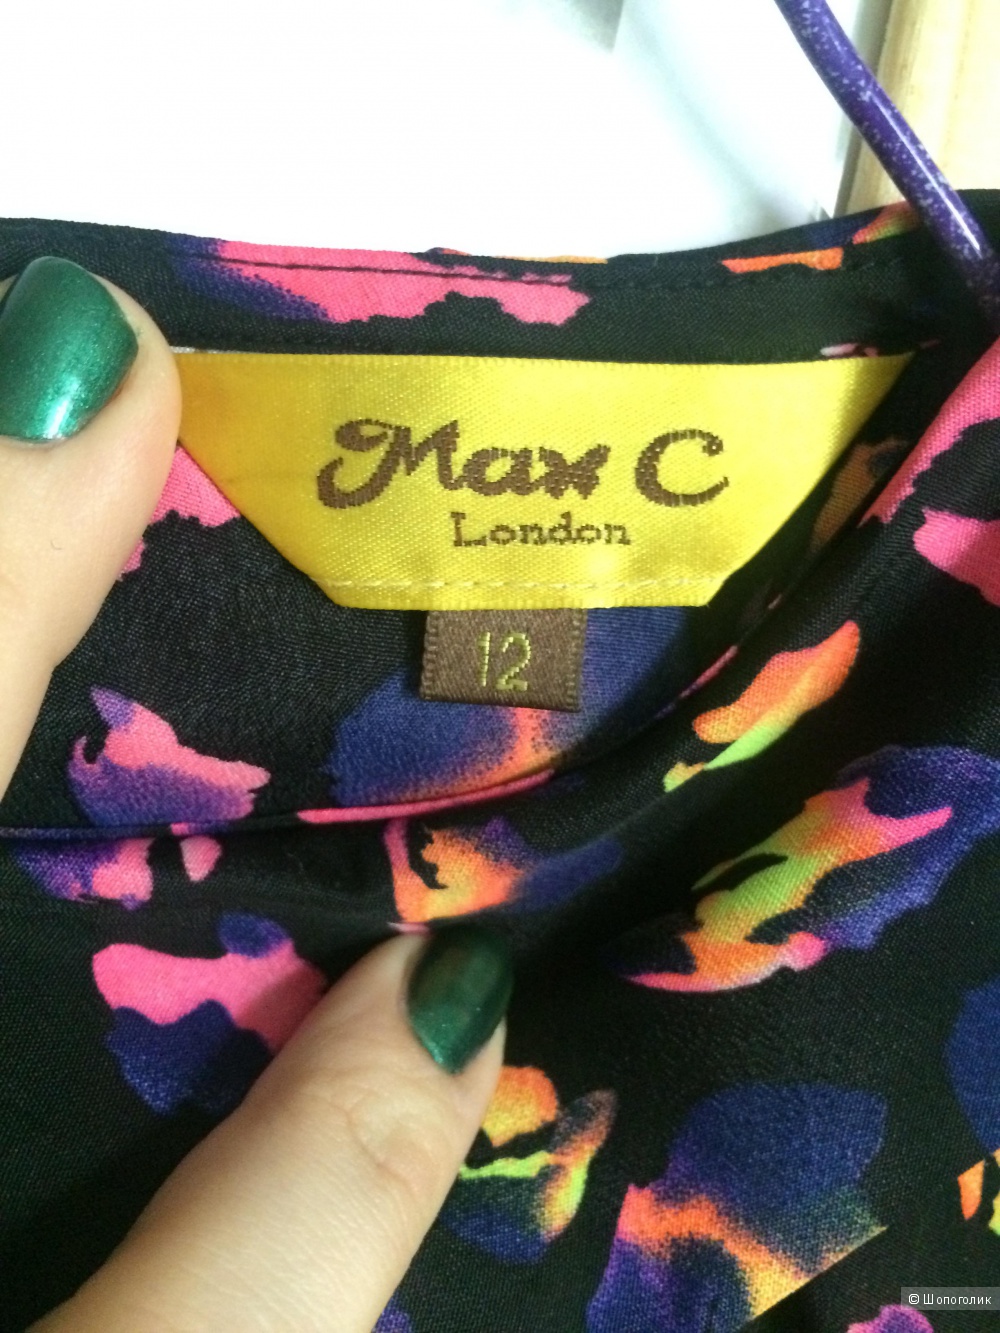 Max C London блузка Uk12 только примерка.